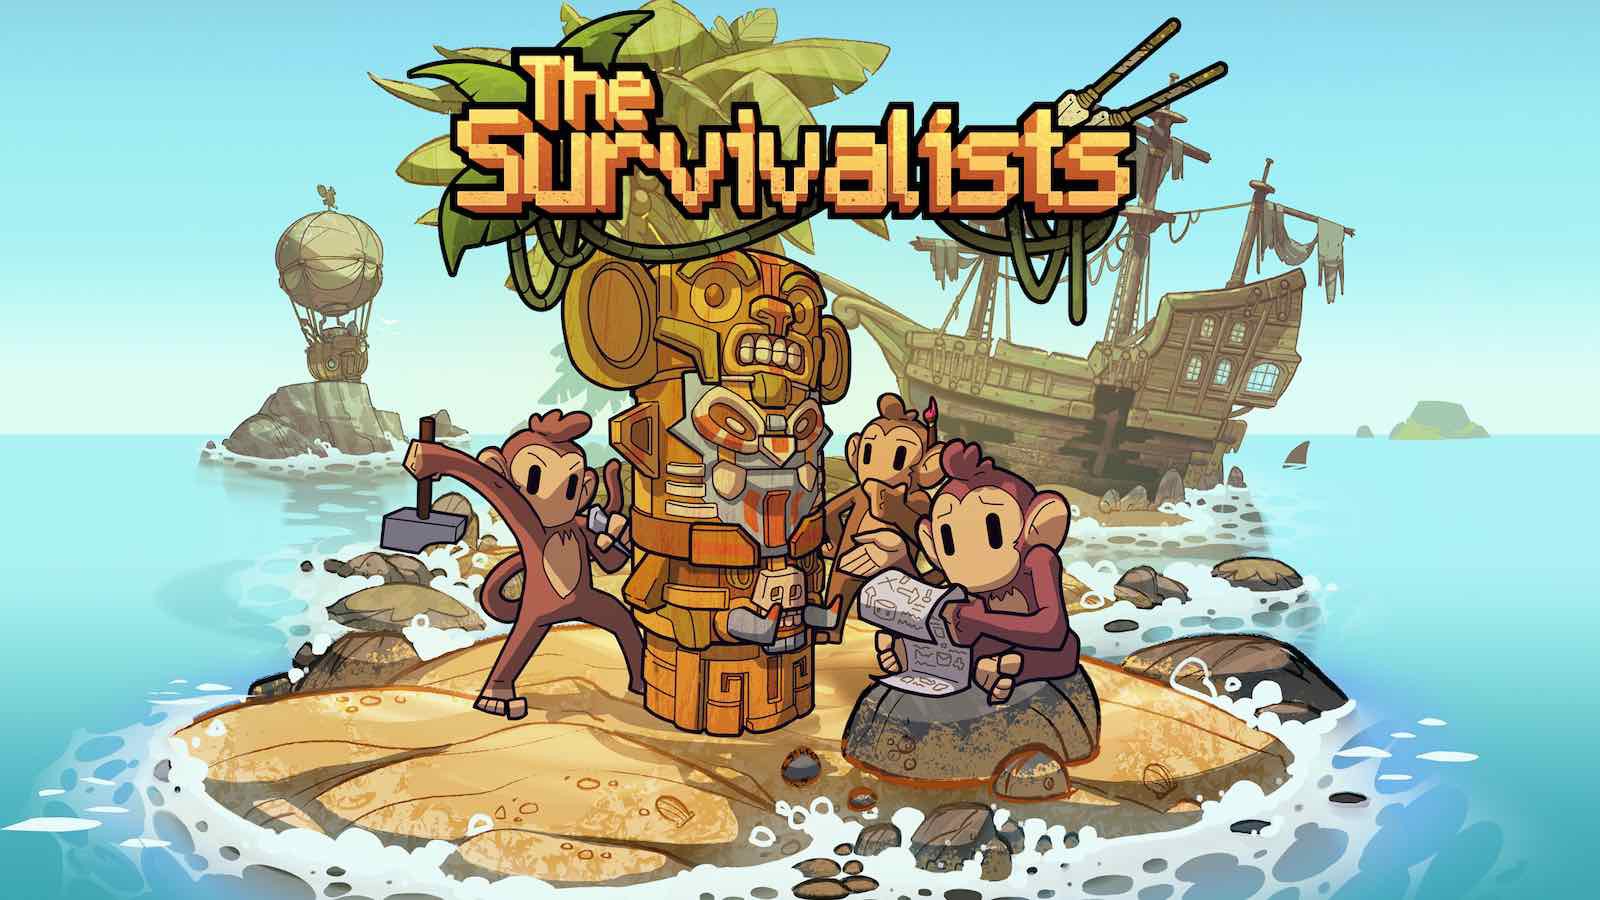 IslandThemed Sandbox Game 'The Survivalists' Debuts on Apple Arcade